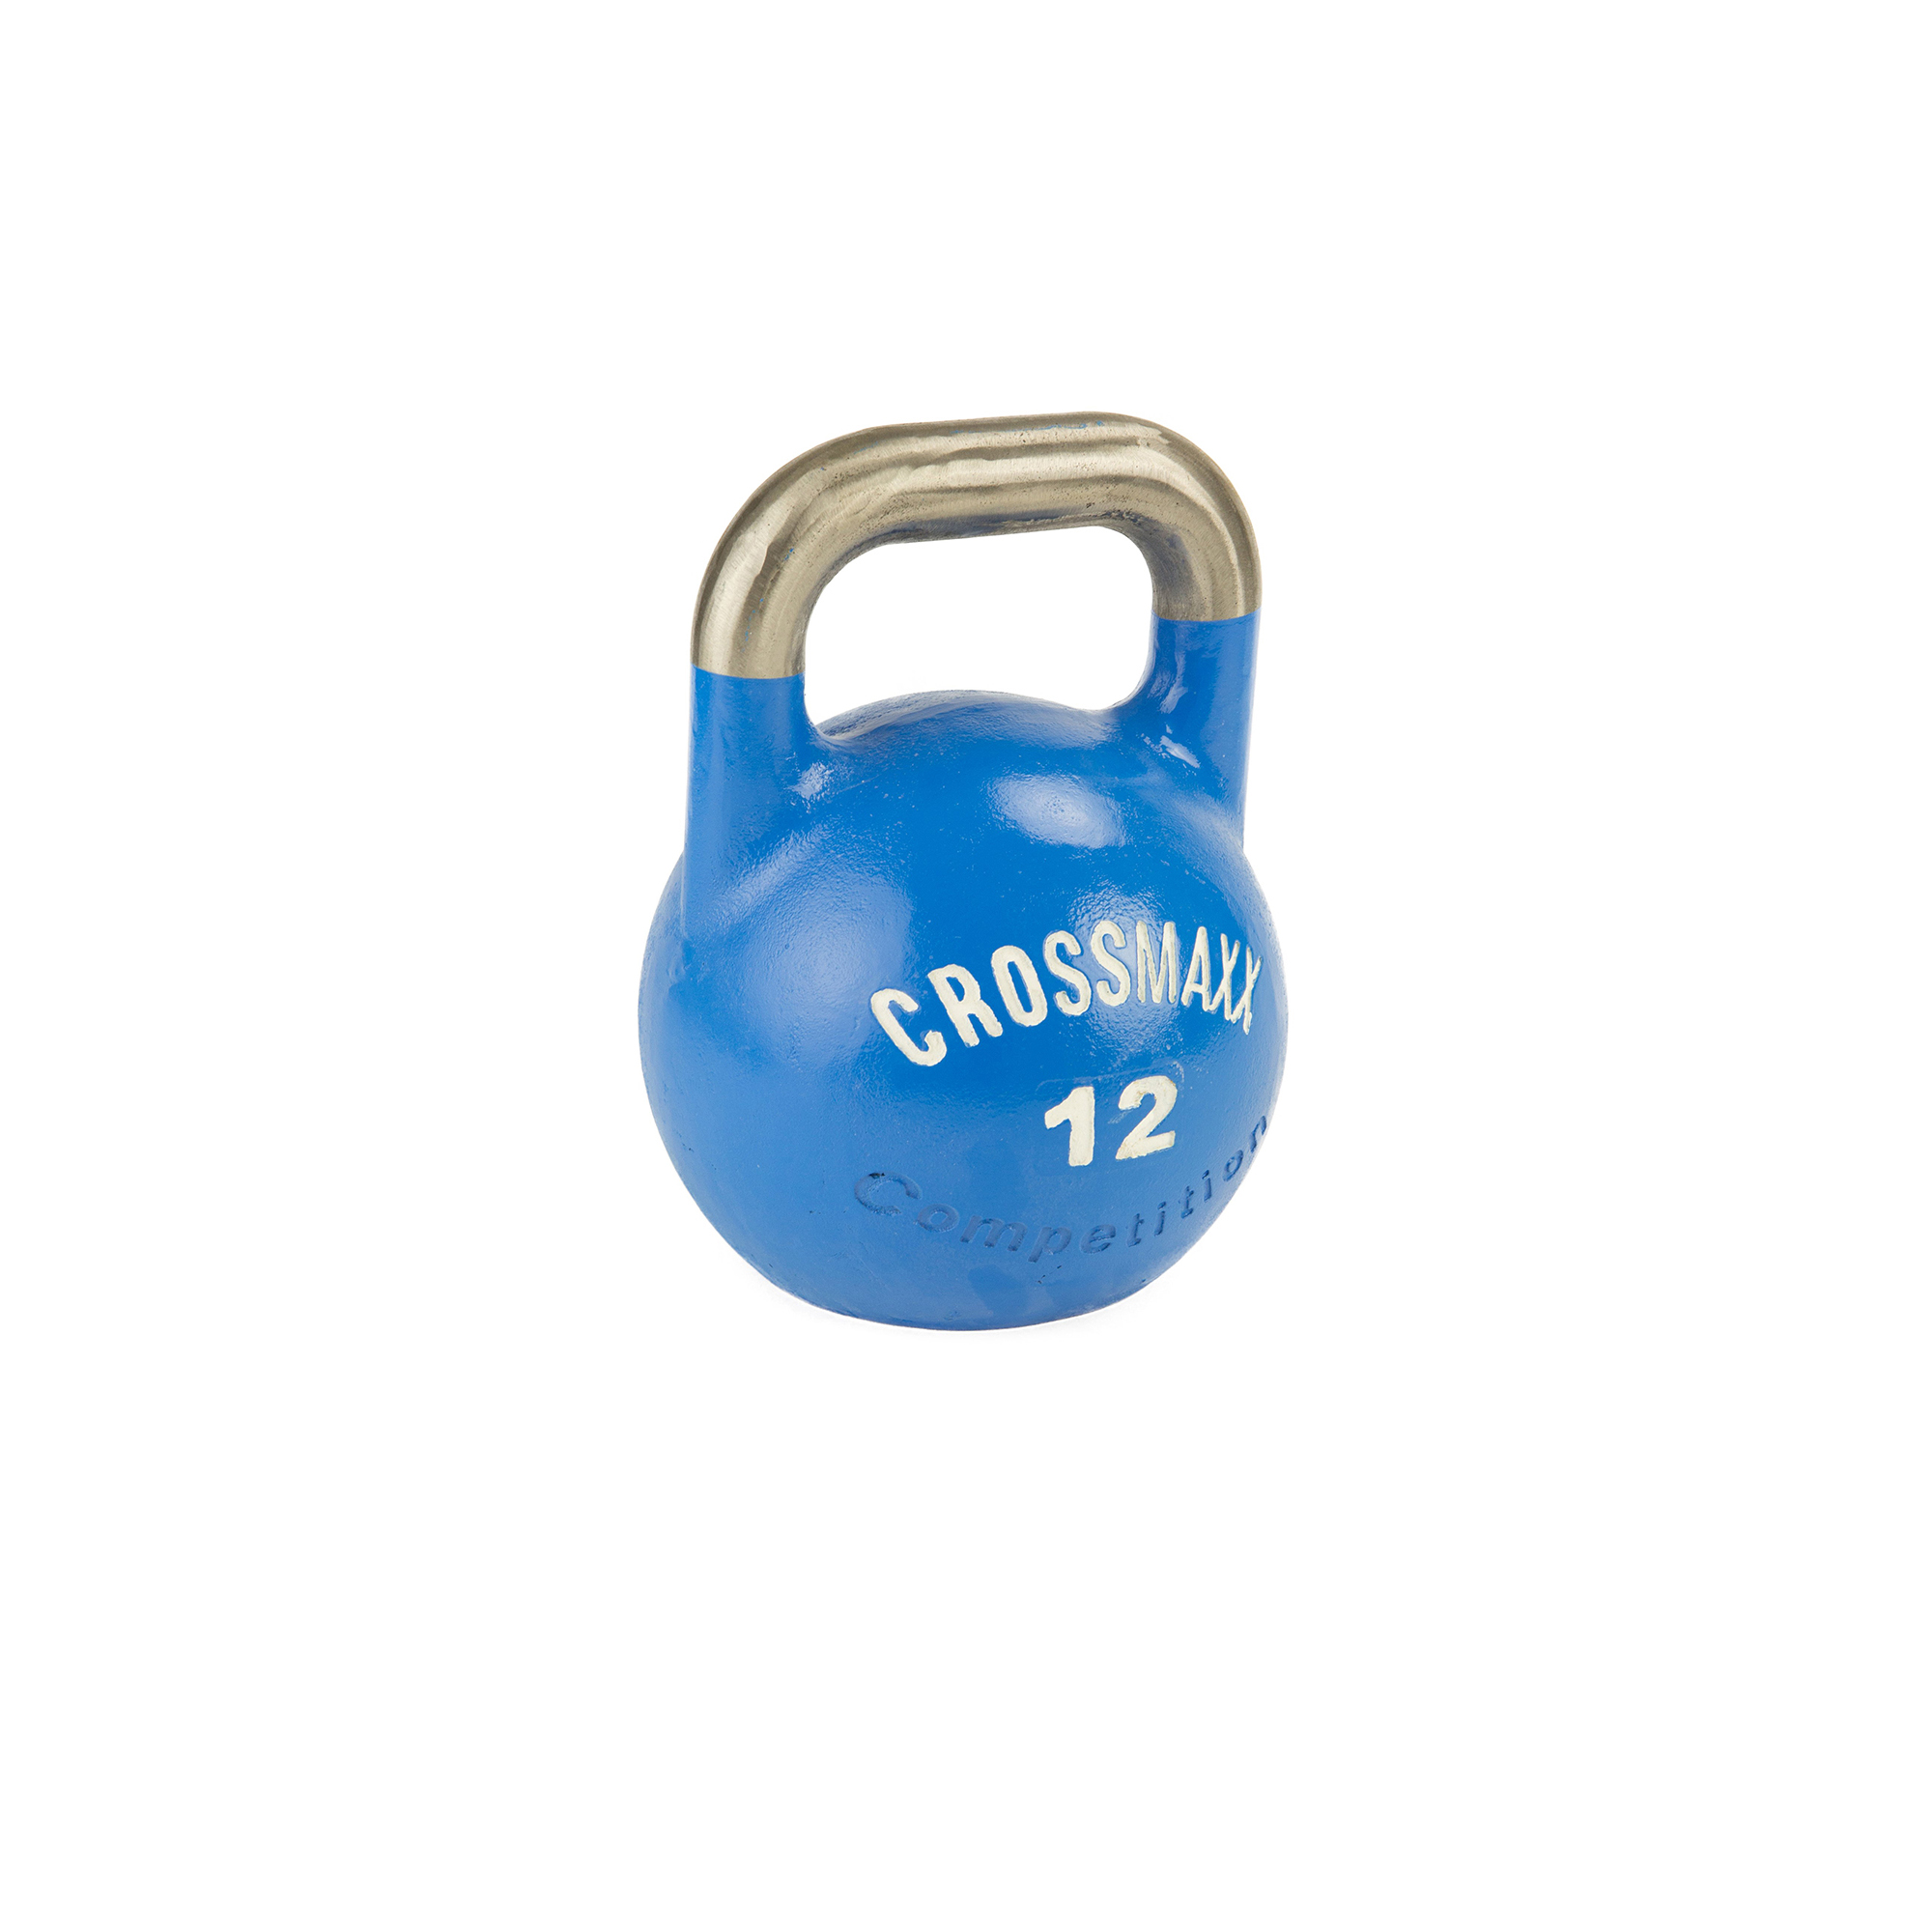 Crossmaxx Competition kettlebell | 4-48 kg